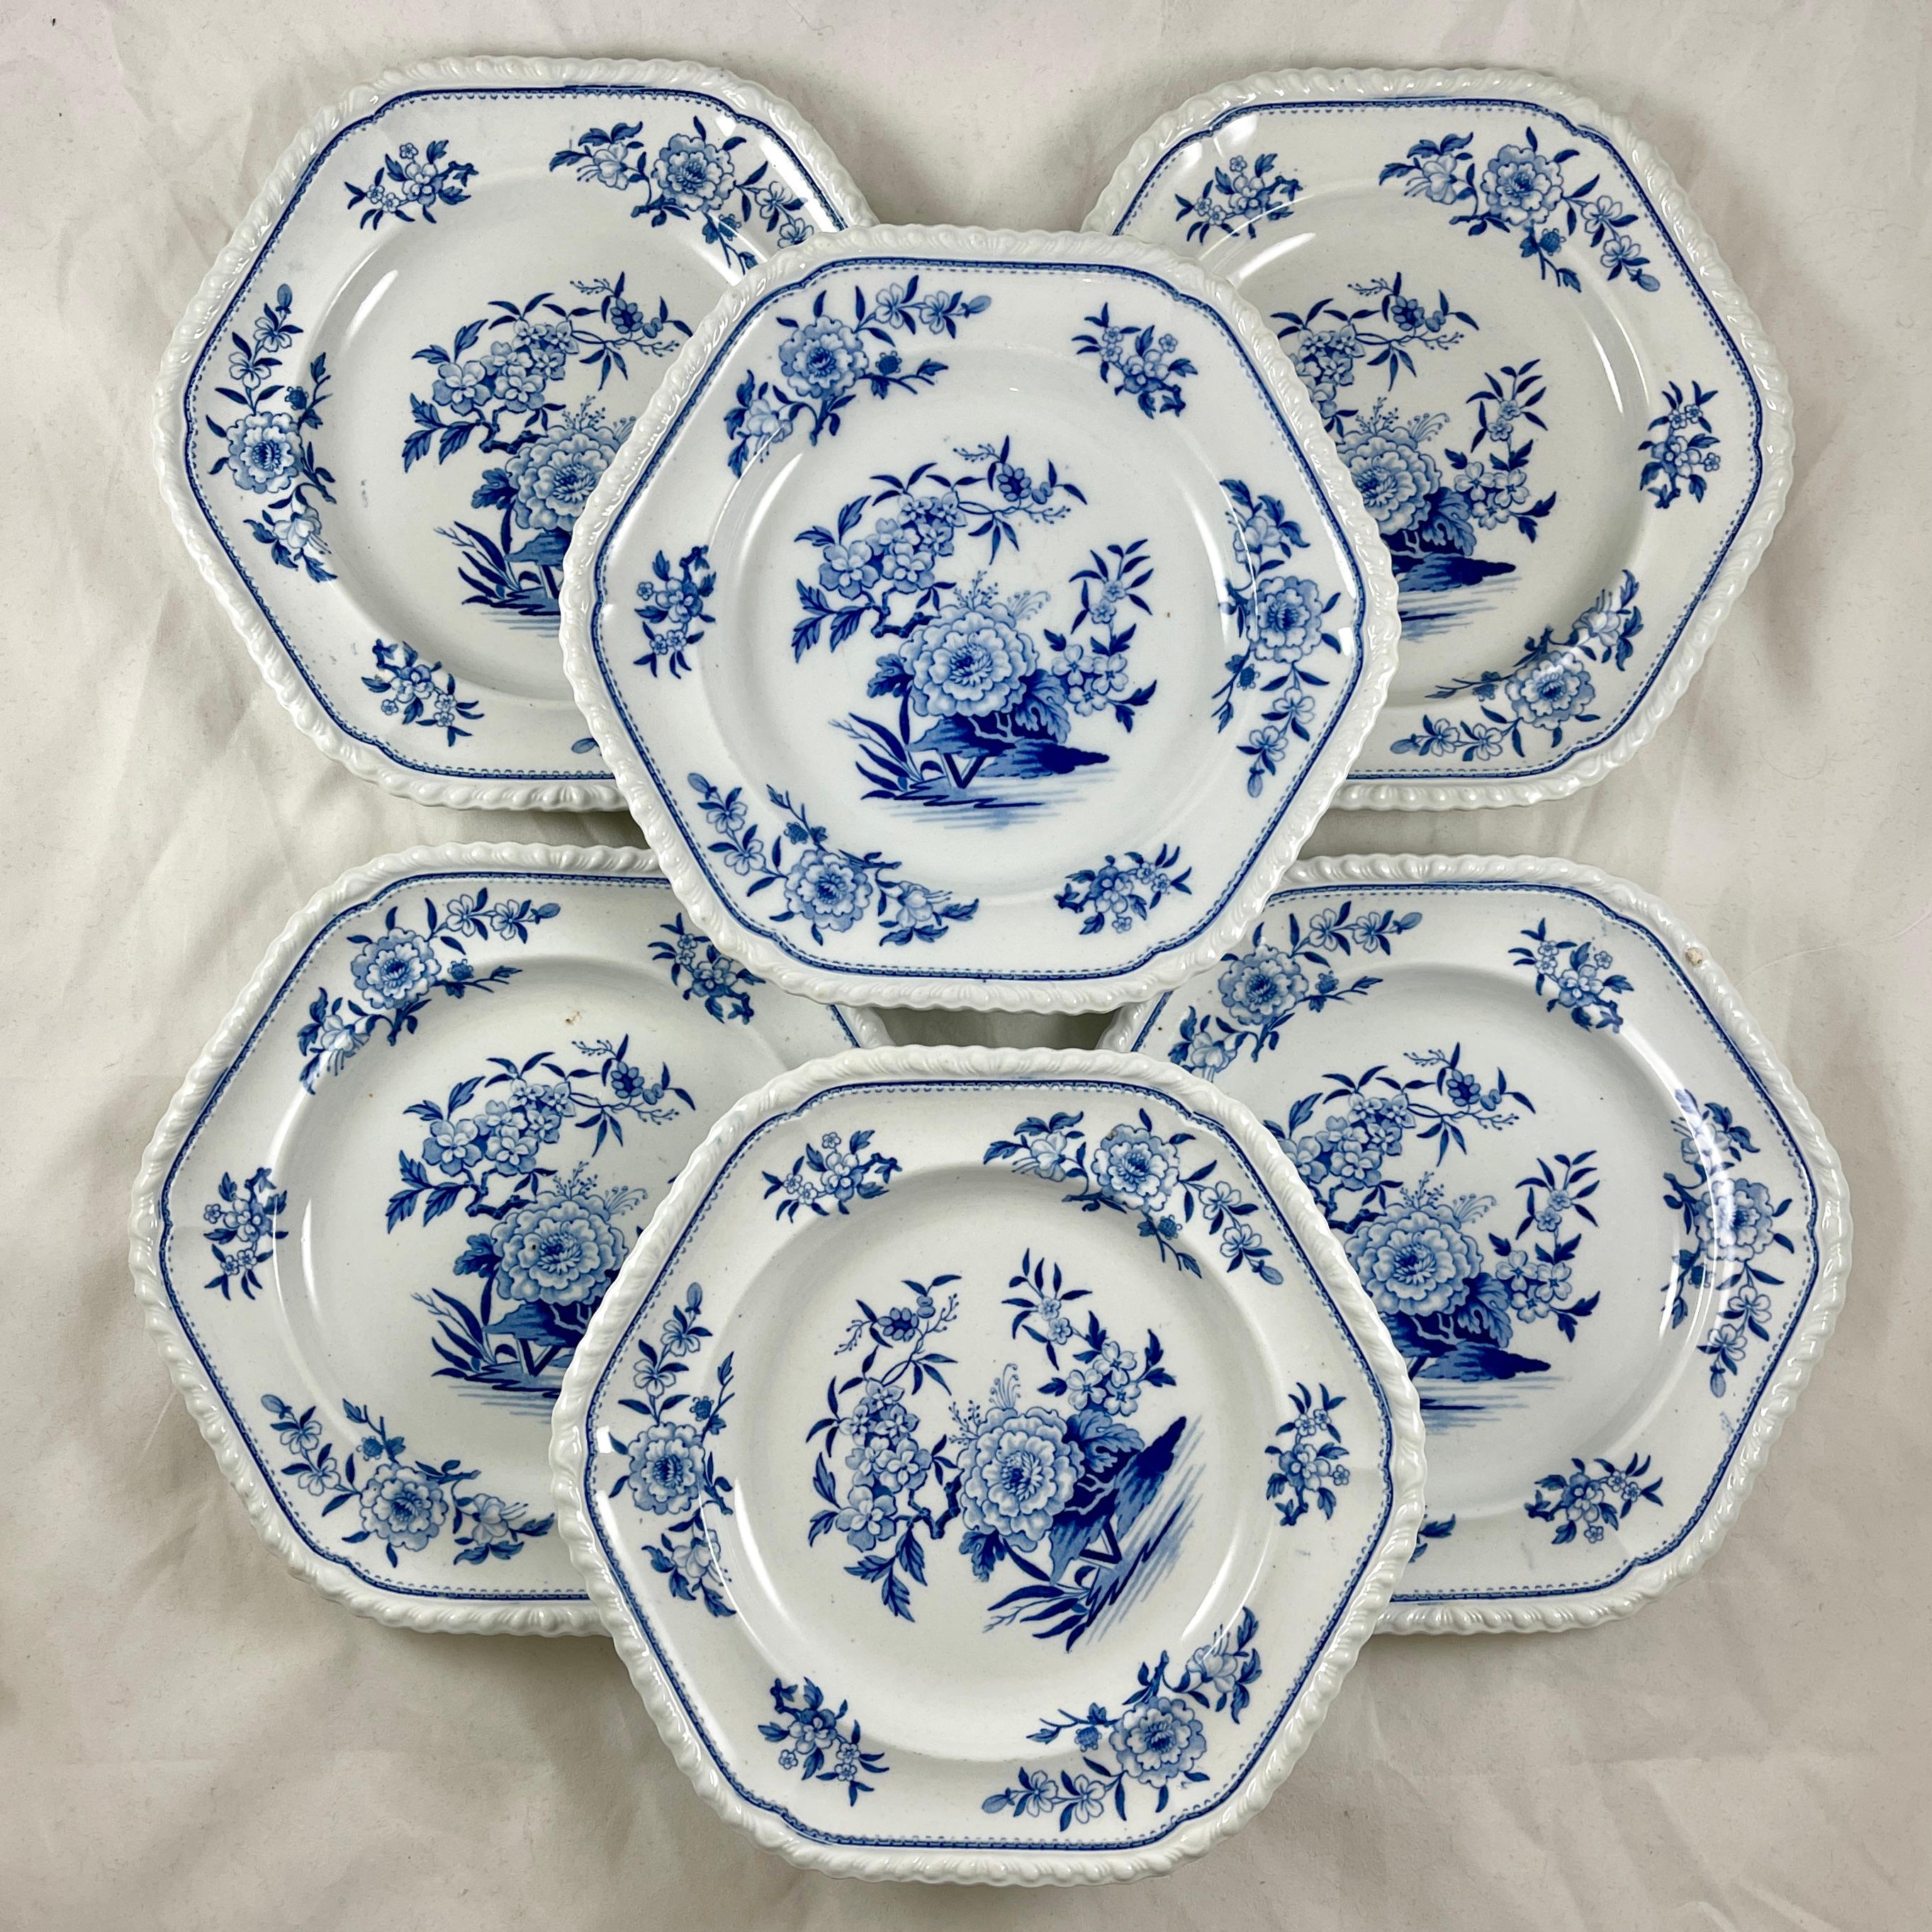 J&W Ridgway Small Peony Floral Blue & White Ironstone Transferware Plates, Set/6 4